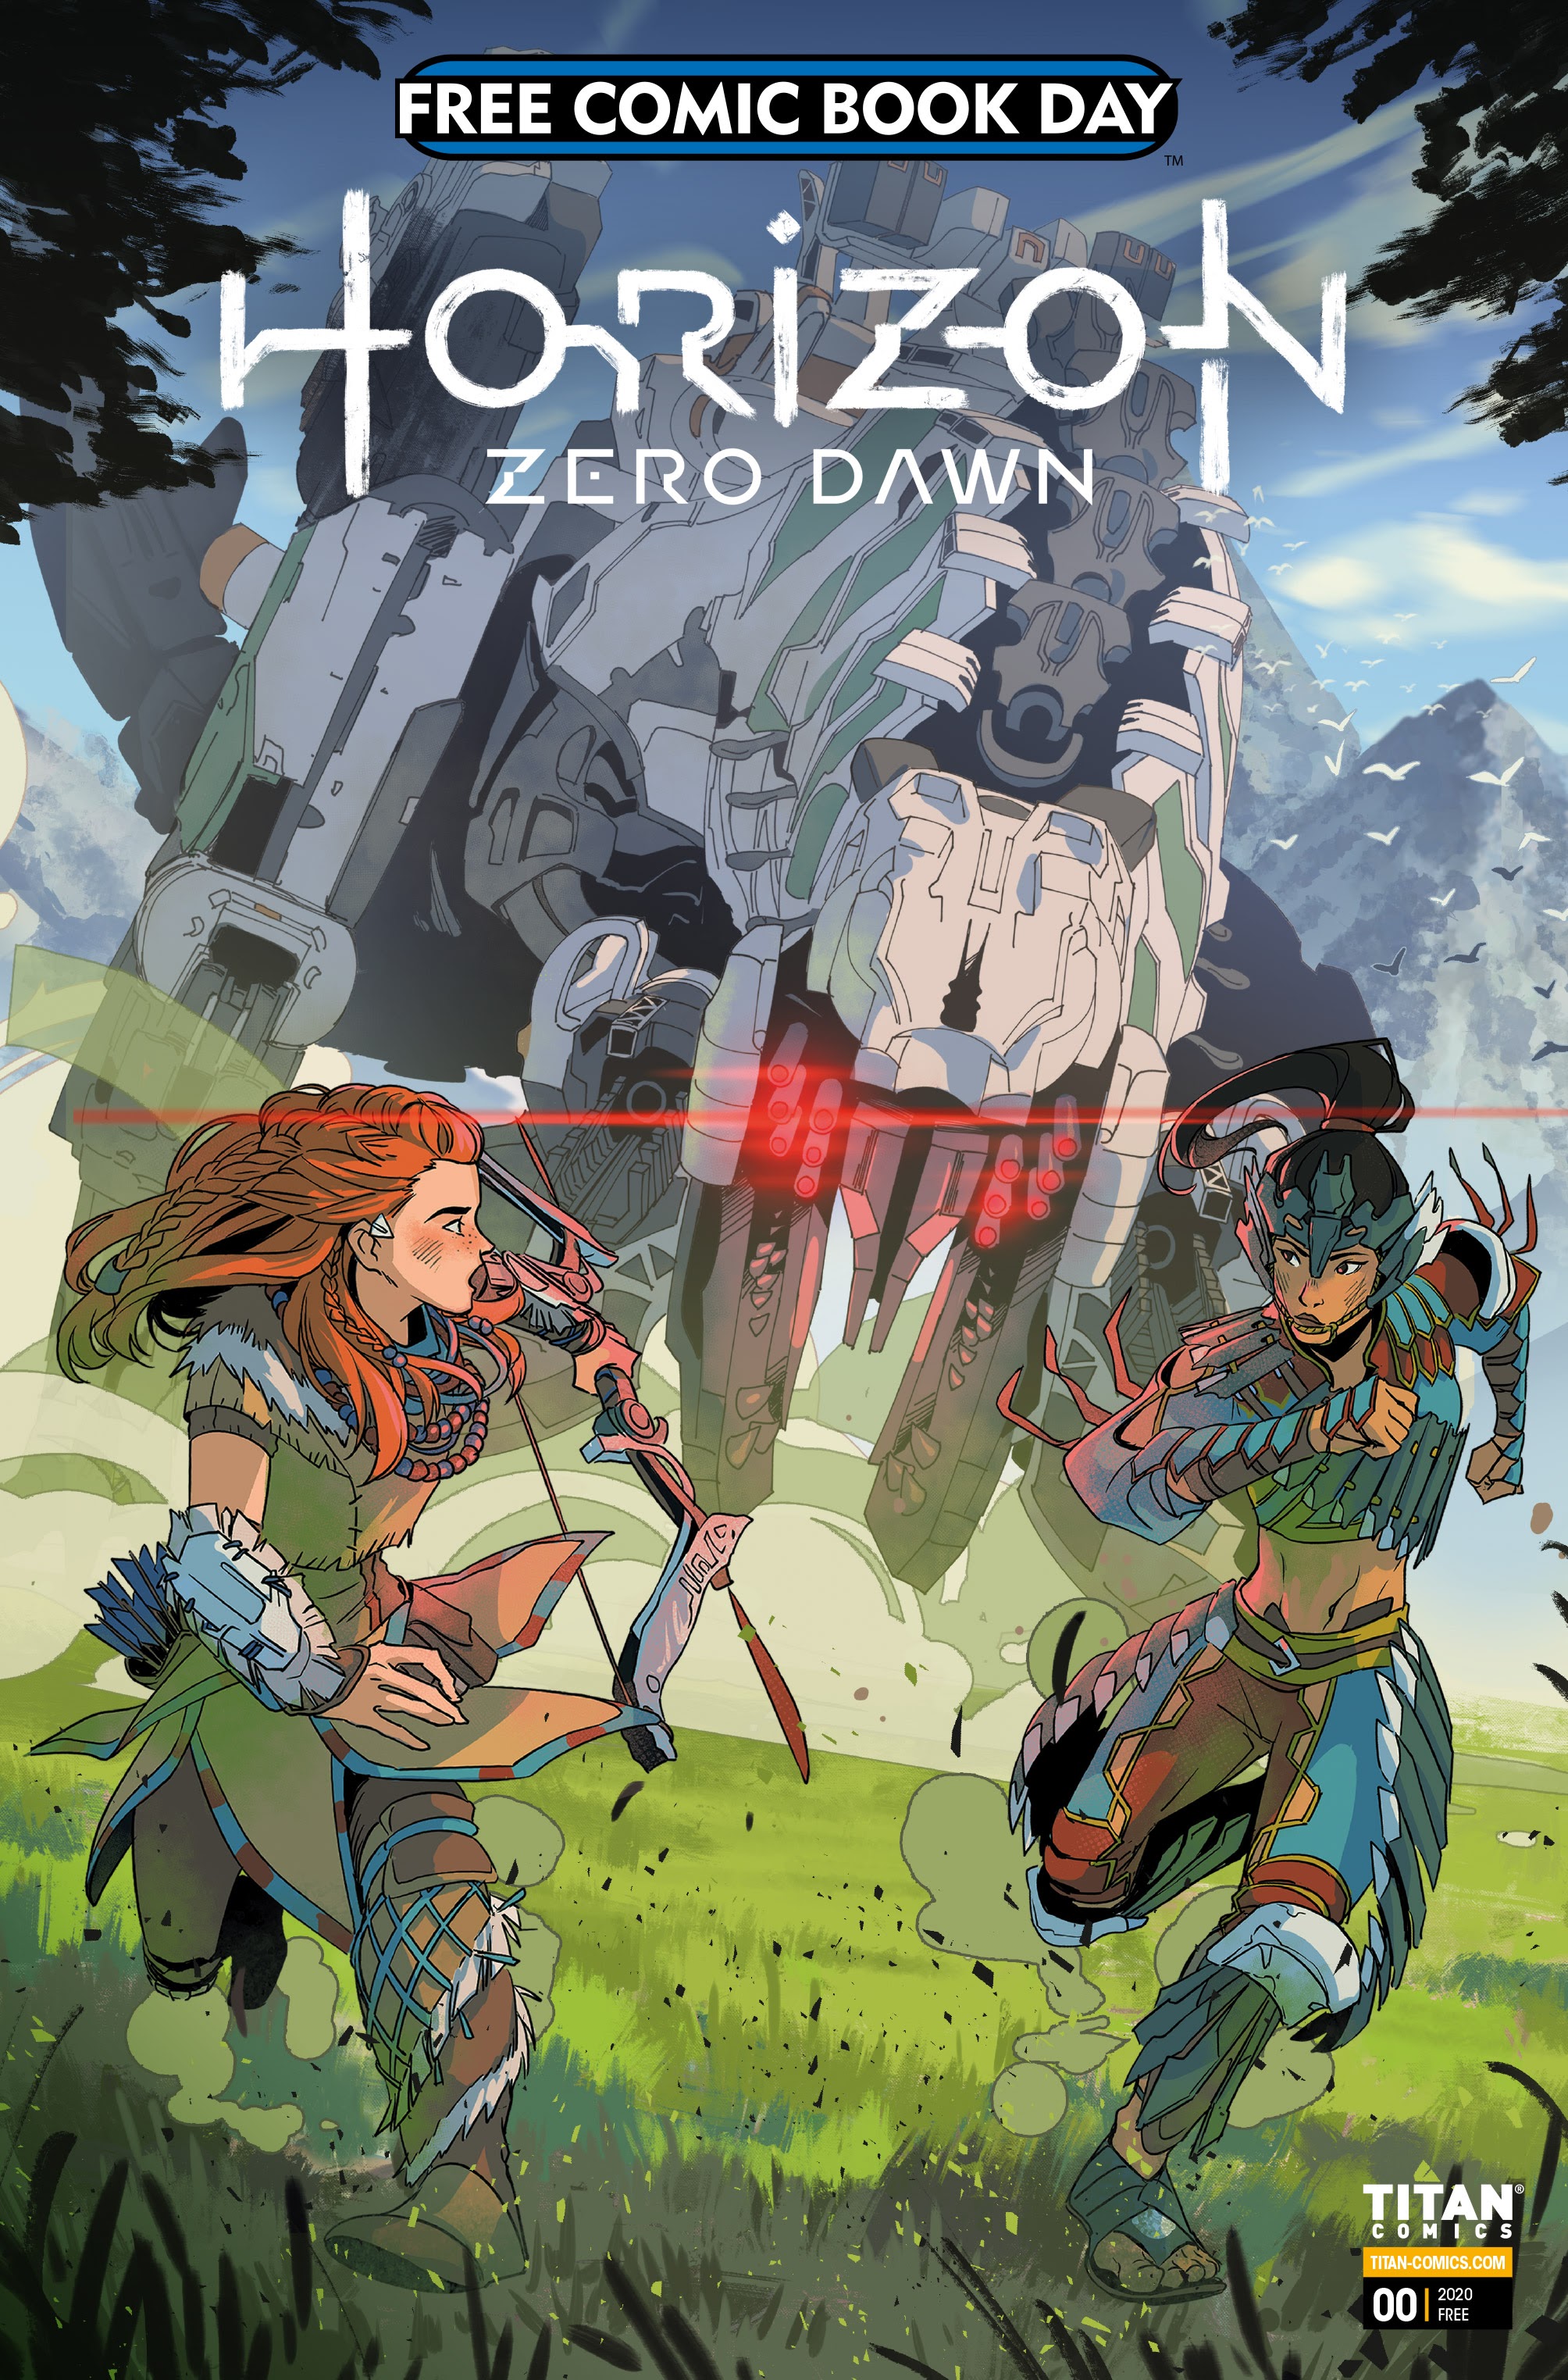 Read online Free Comic Book Day 2020 comic -  Issue # Horizon Zero Dawn - 1